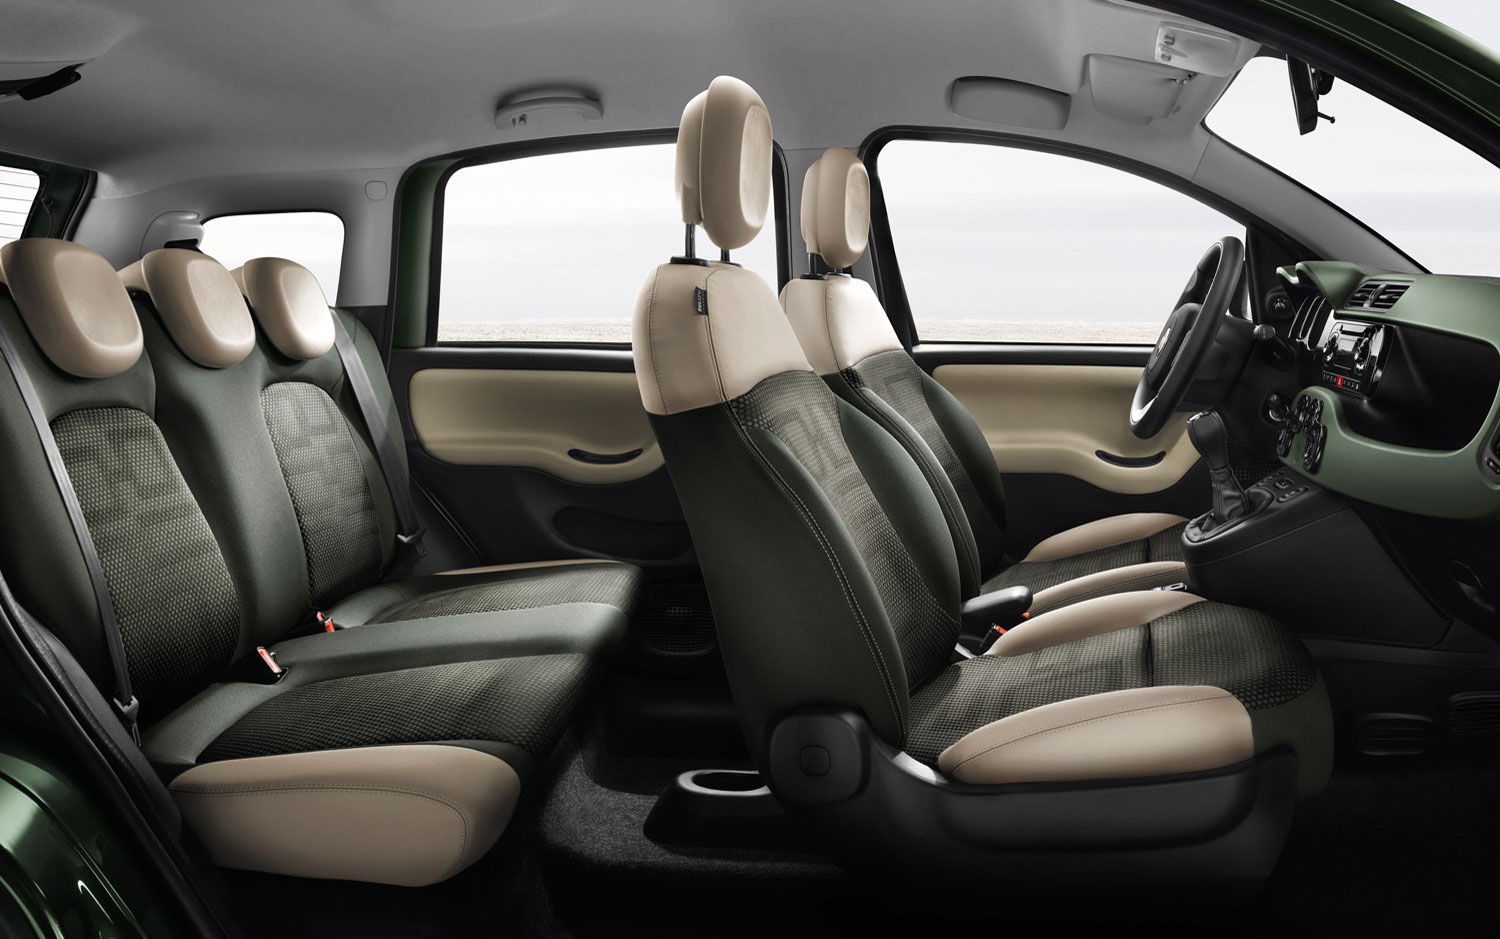 Fiat-Panda-4x4-interior.jpg